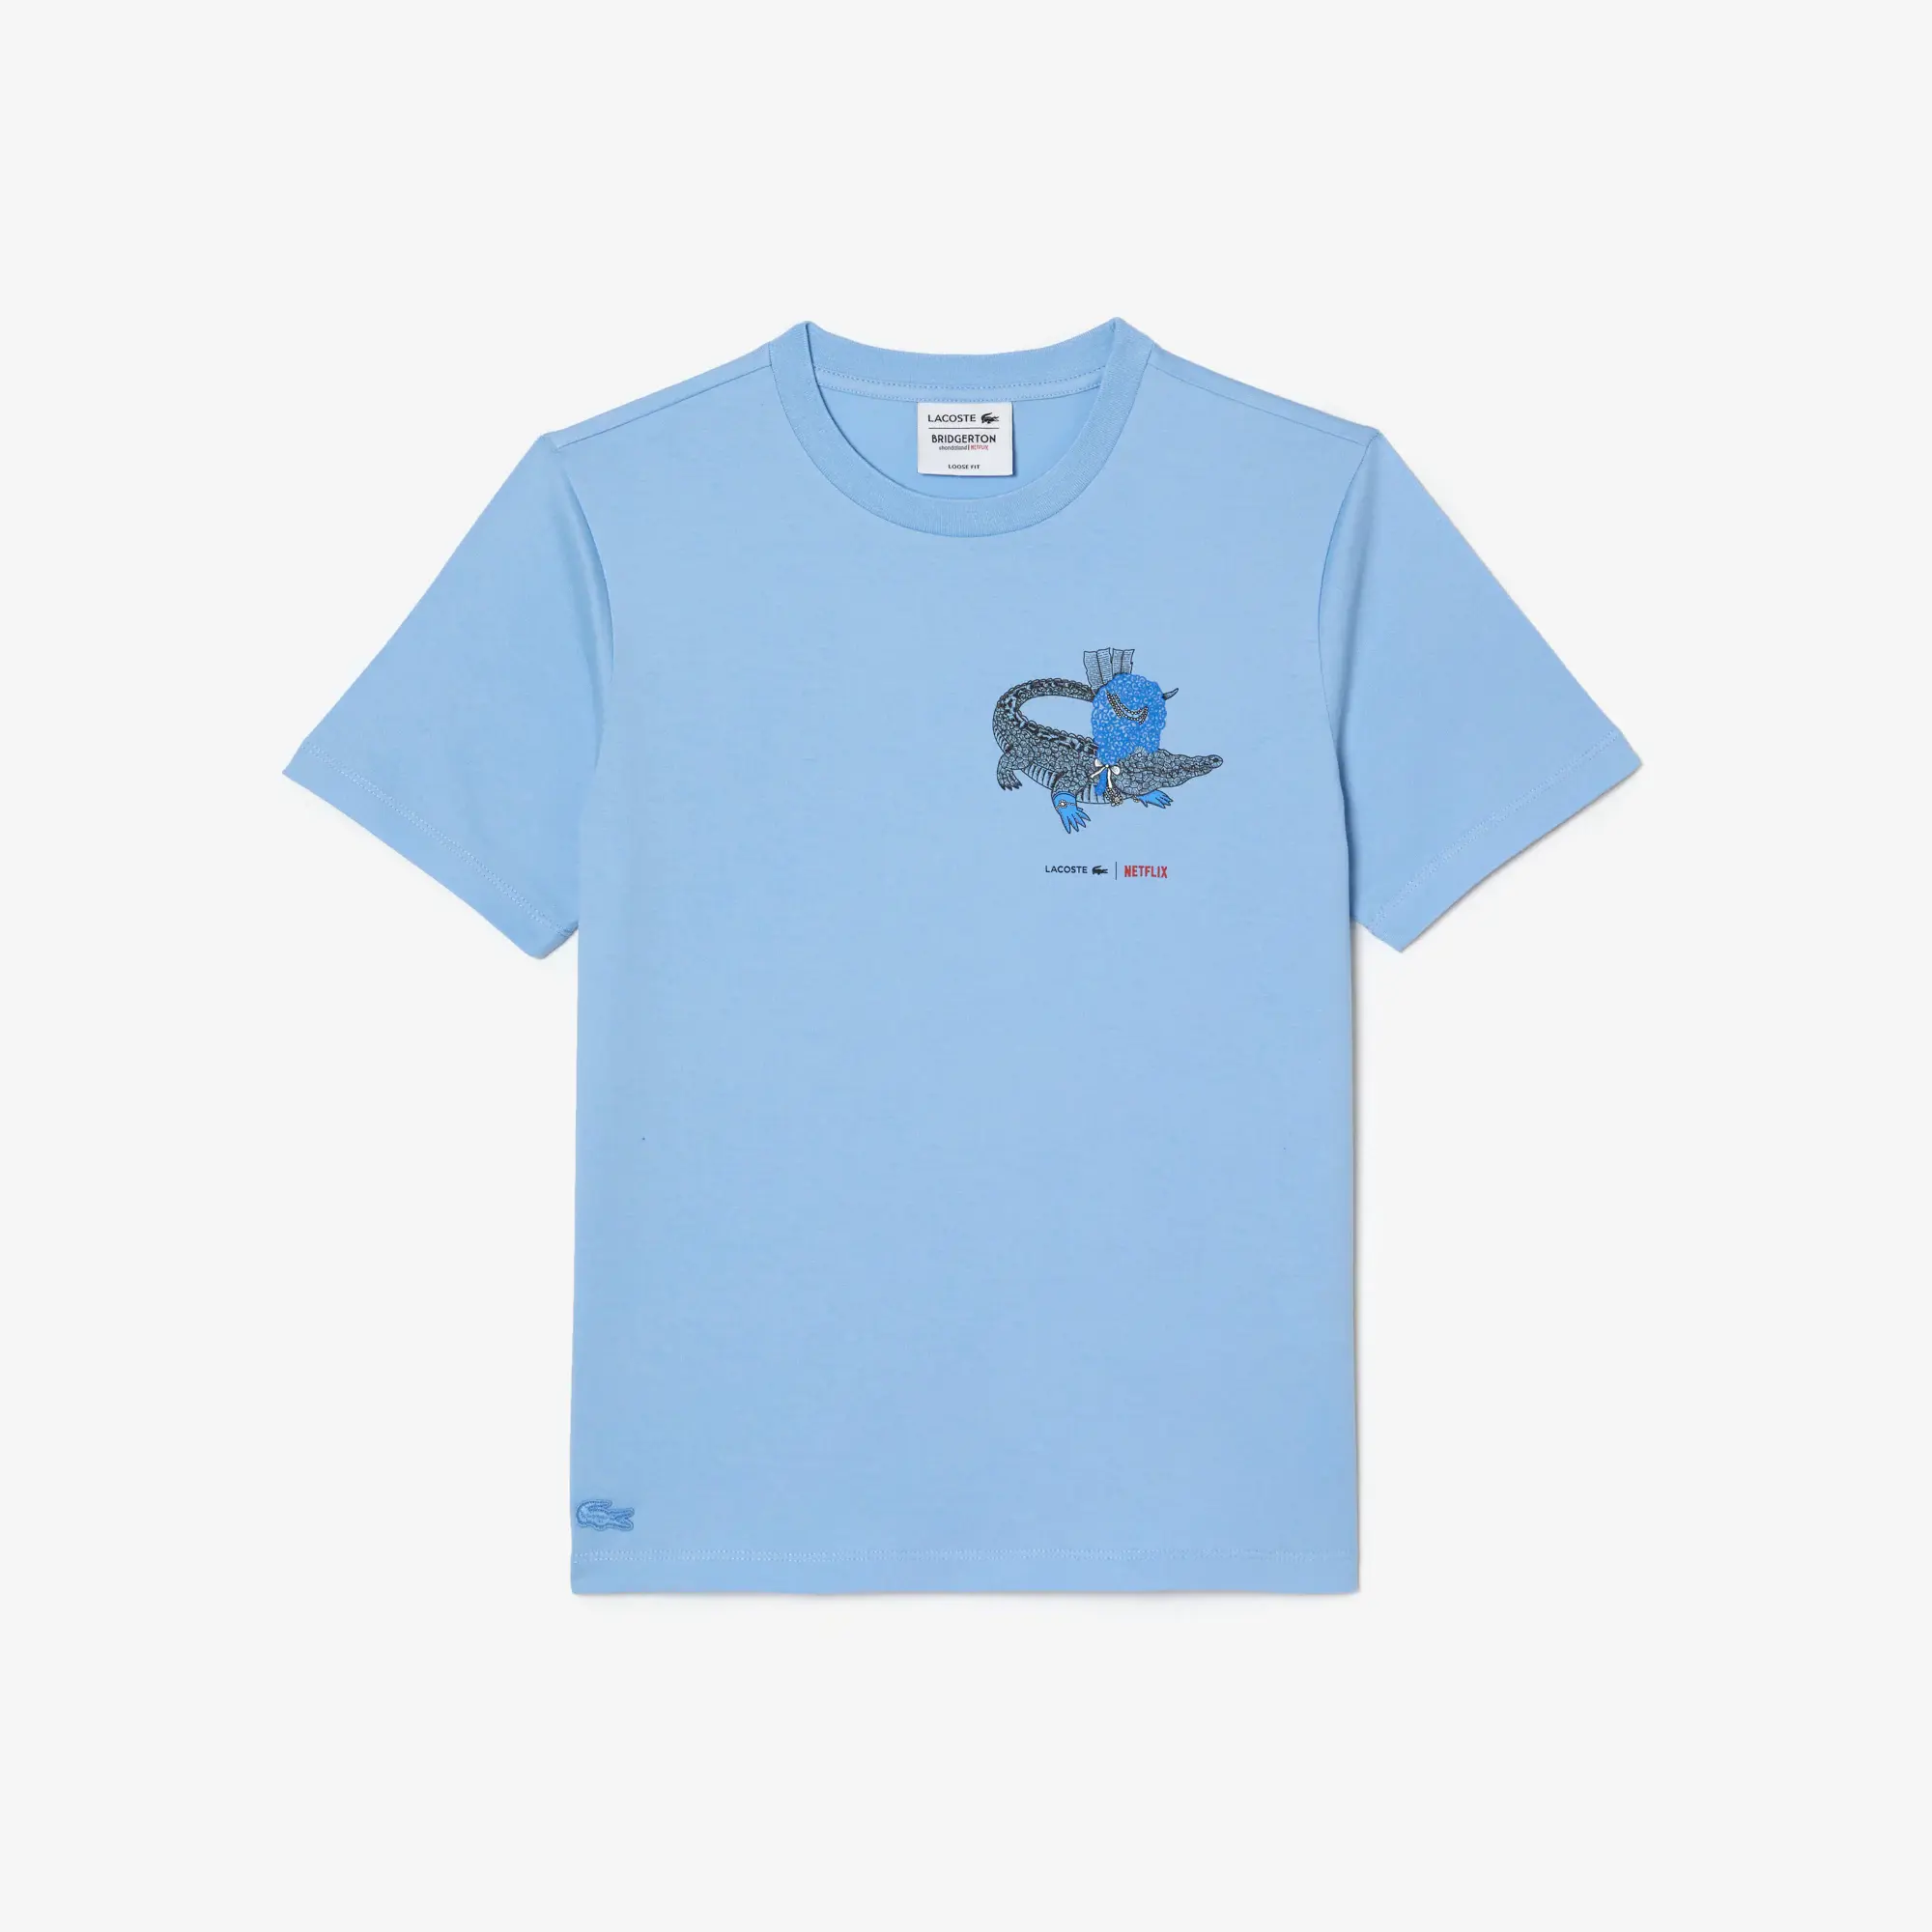 Lacoste Women’s Lacoste x Netflix Organic Cotton Jersey T-Shirt. 2